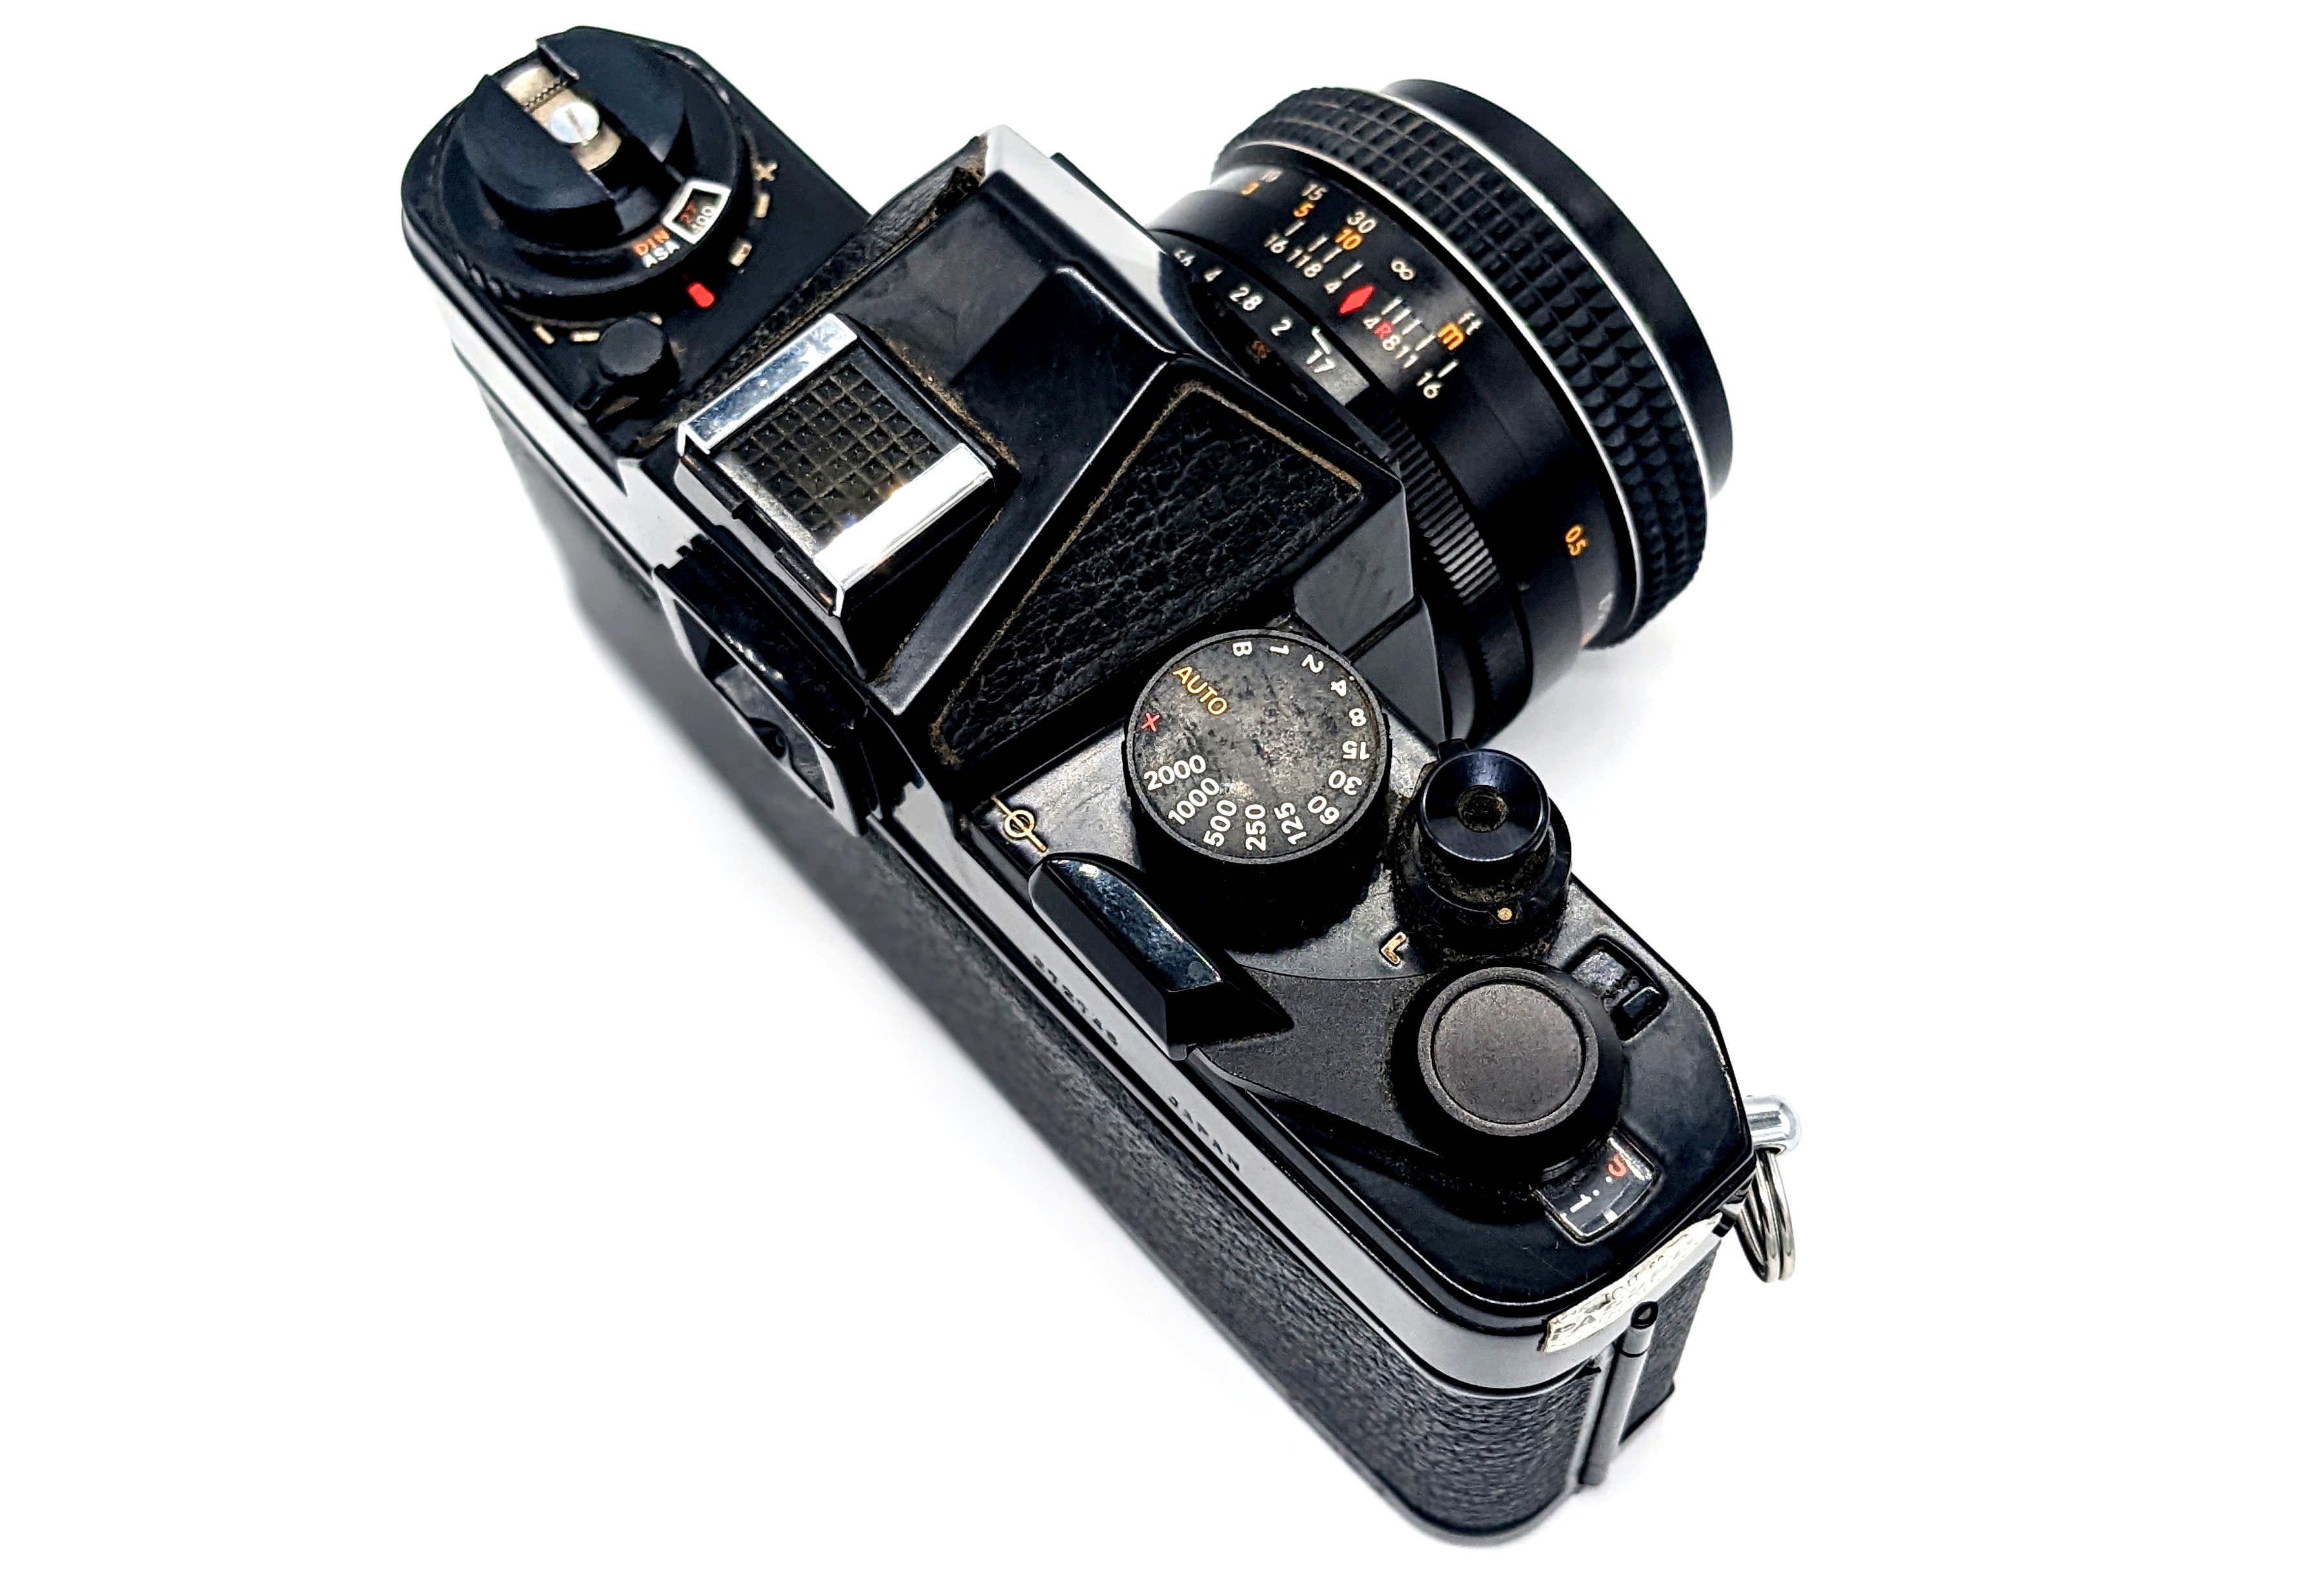 2x NUOVA 1.5V Batterie per Contax Film Fotocamera Reflex S2 S2B T 139 159 